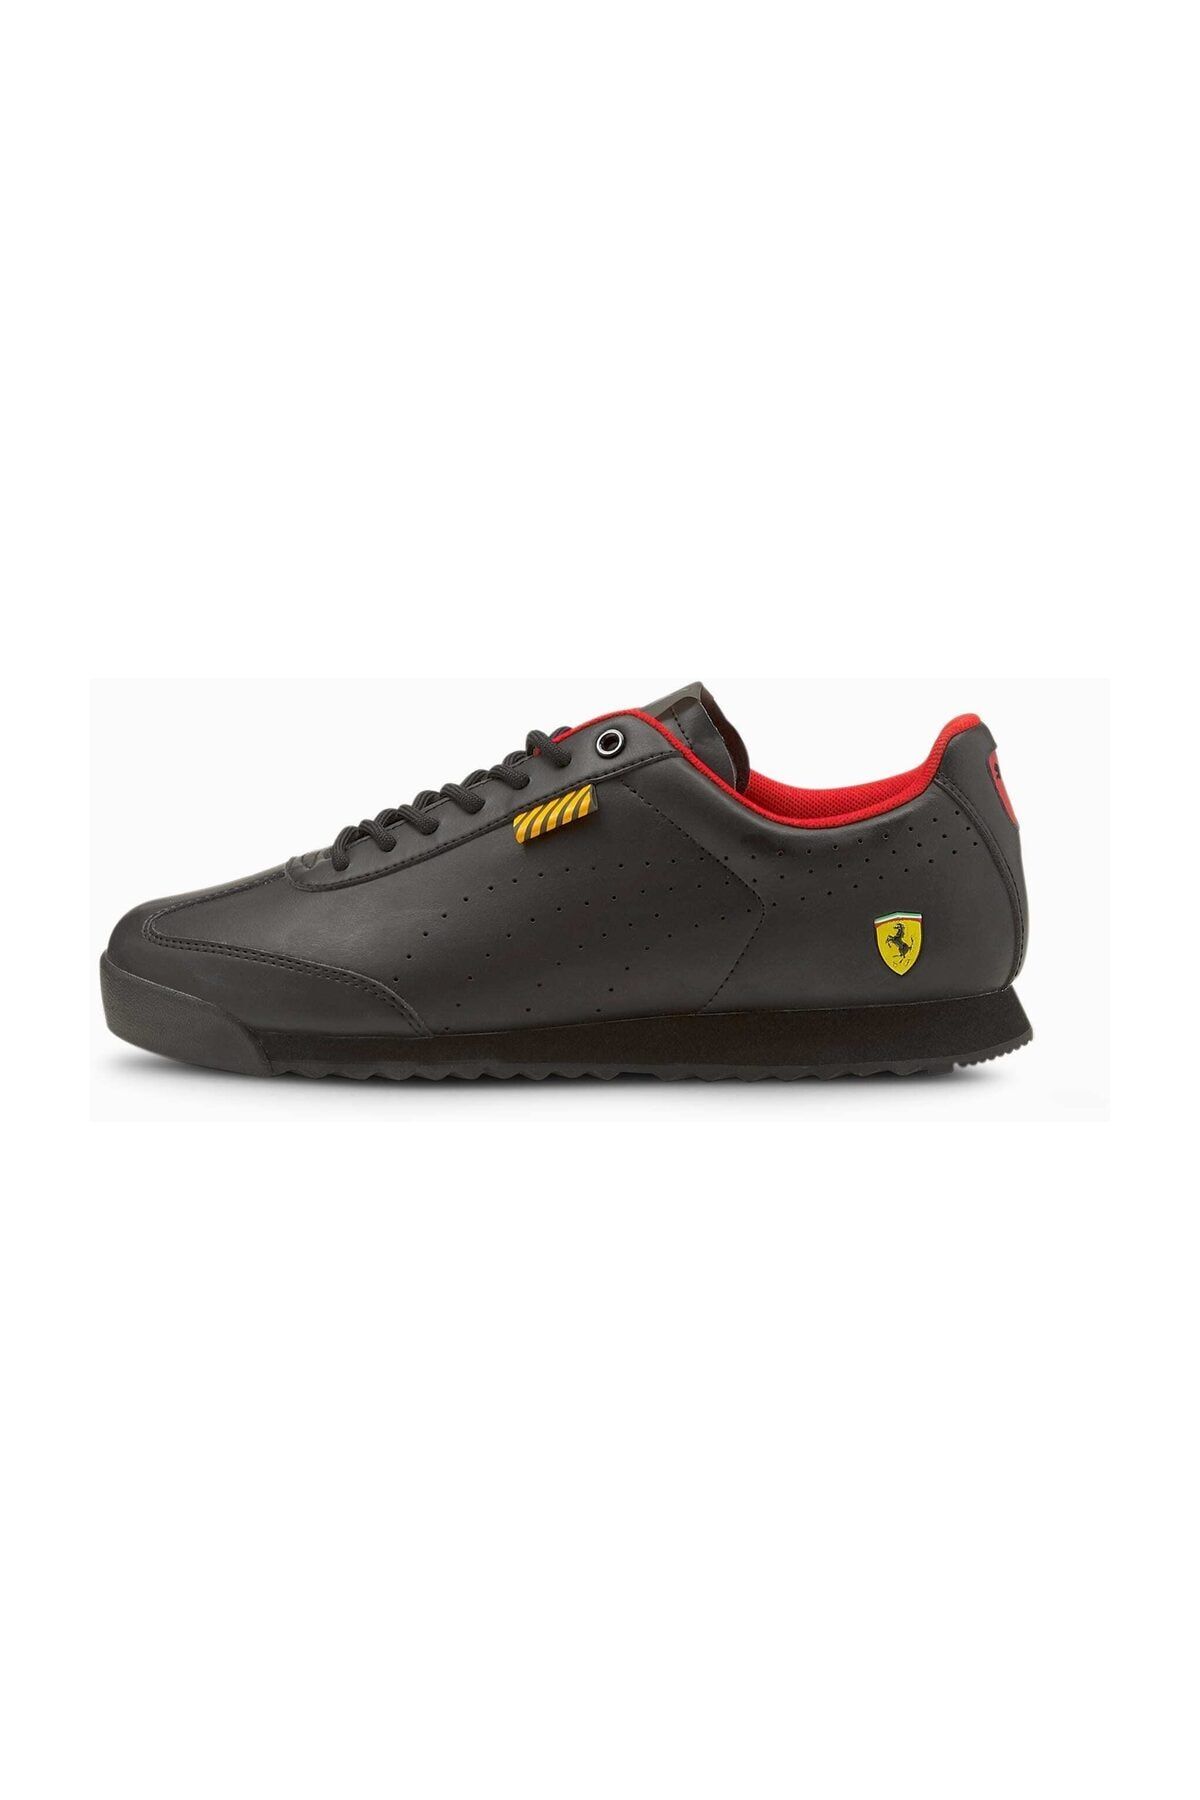 Puma Ferrari Roma Via Perf Unisex Siyah Günlük Ayakkabı - 30685501